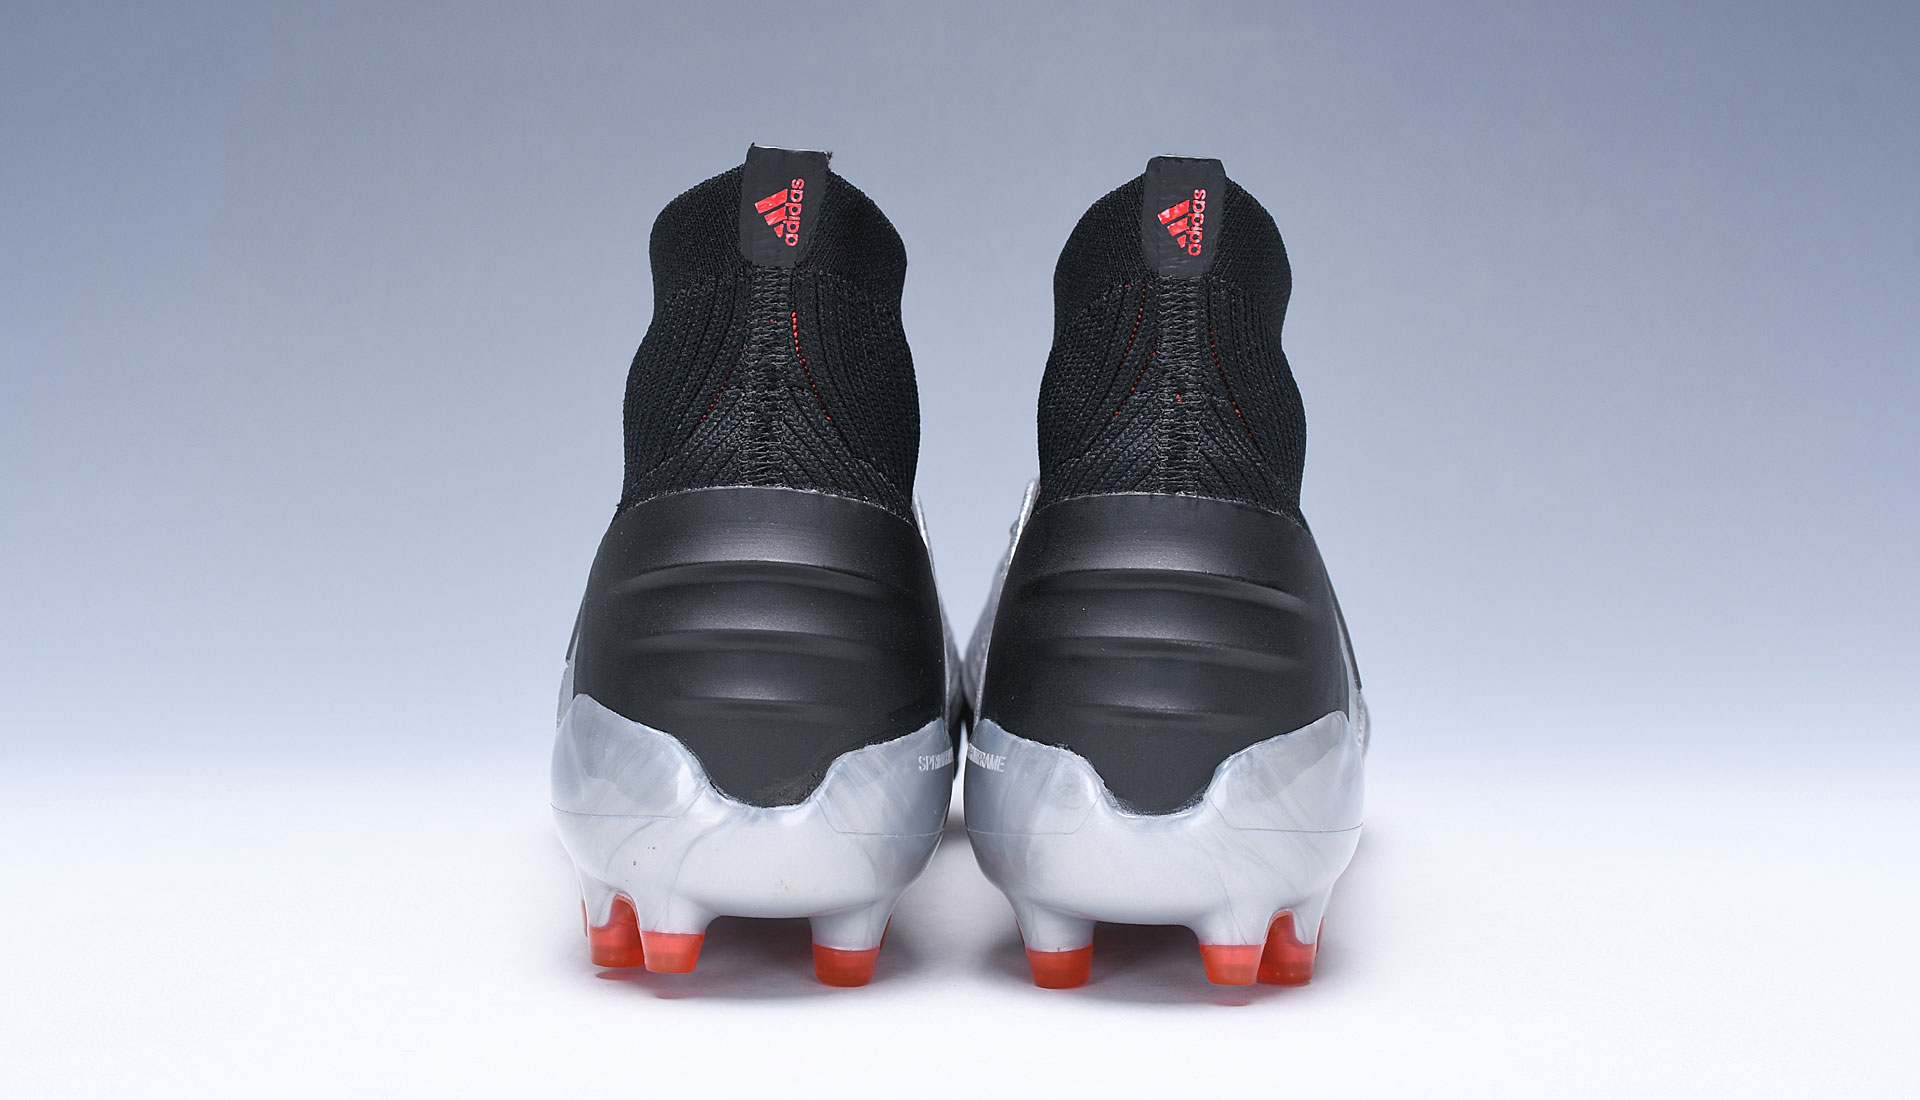 adidas Predator 19.1 AG Silver Red Football Boots Behind